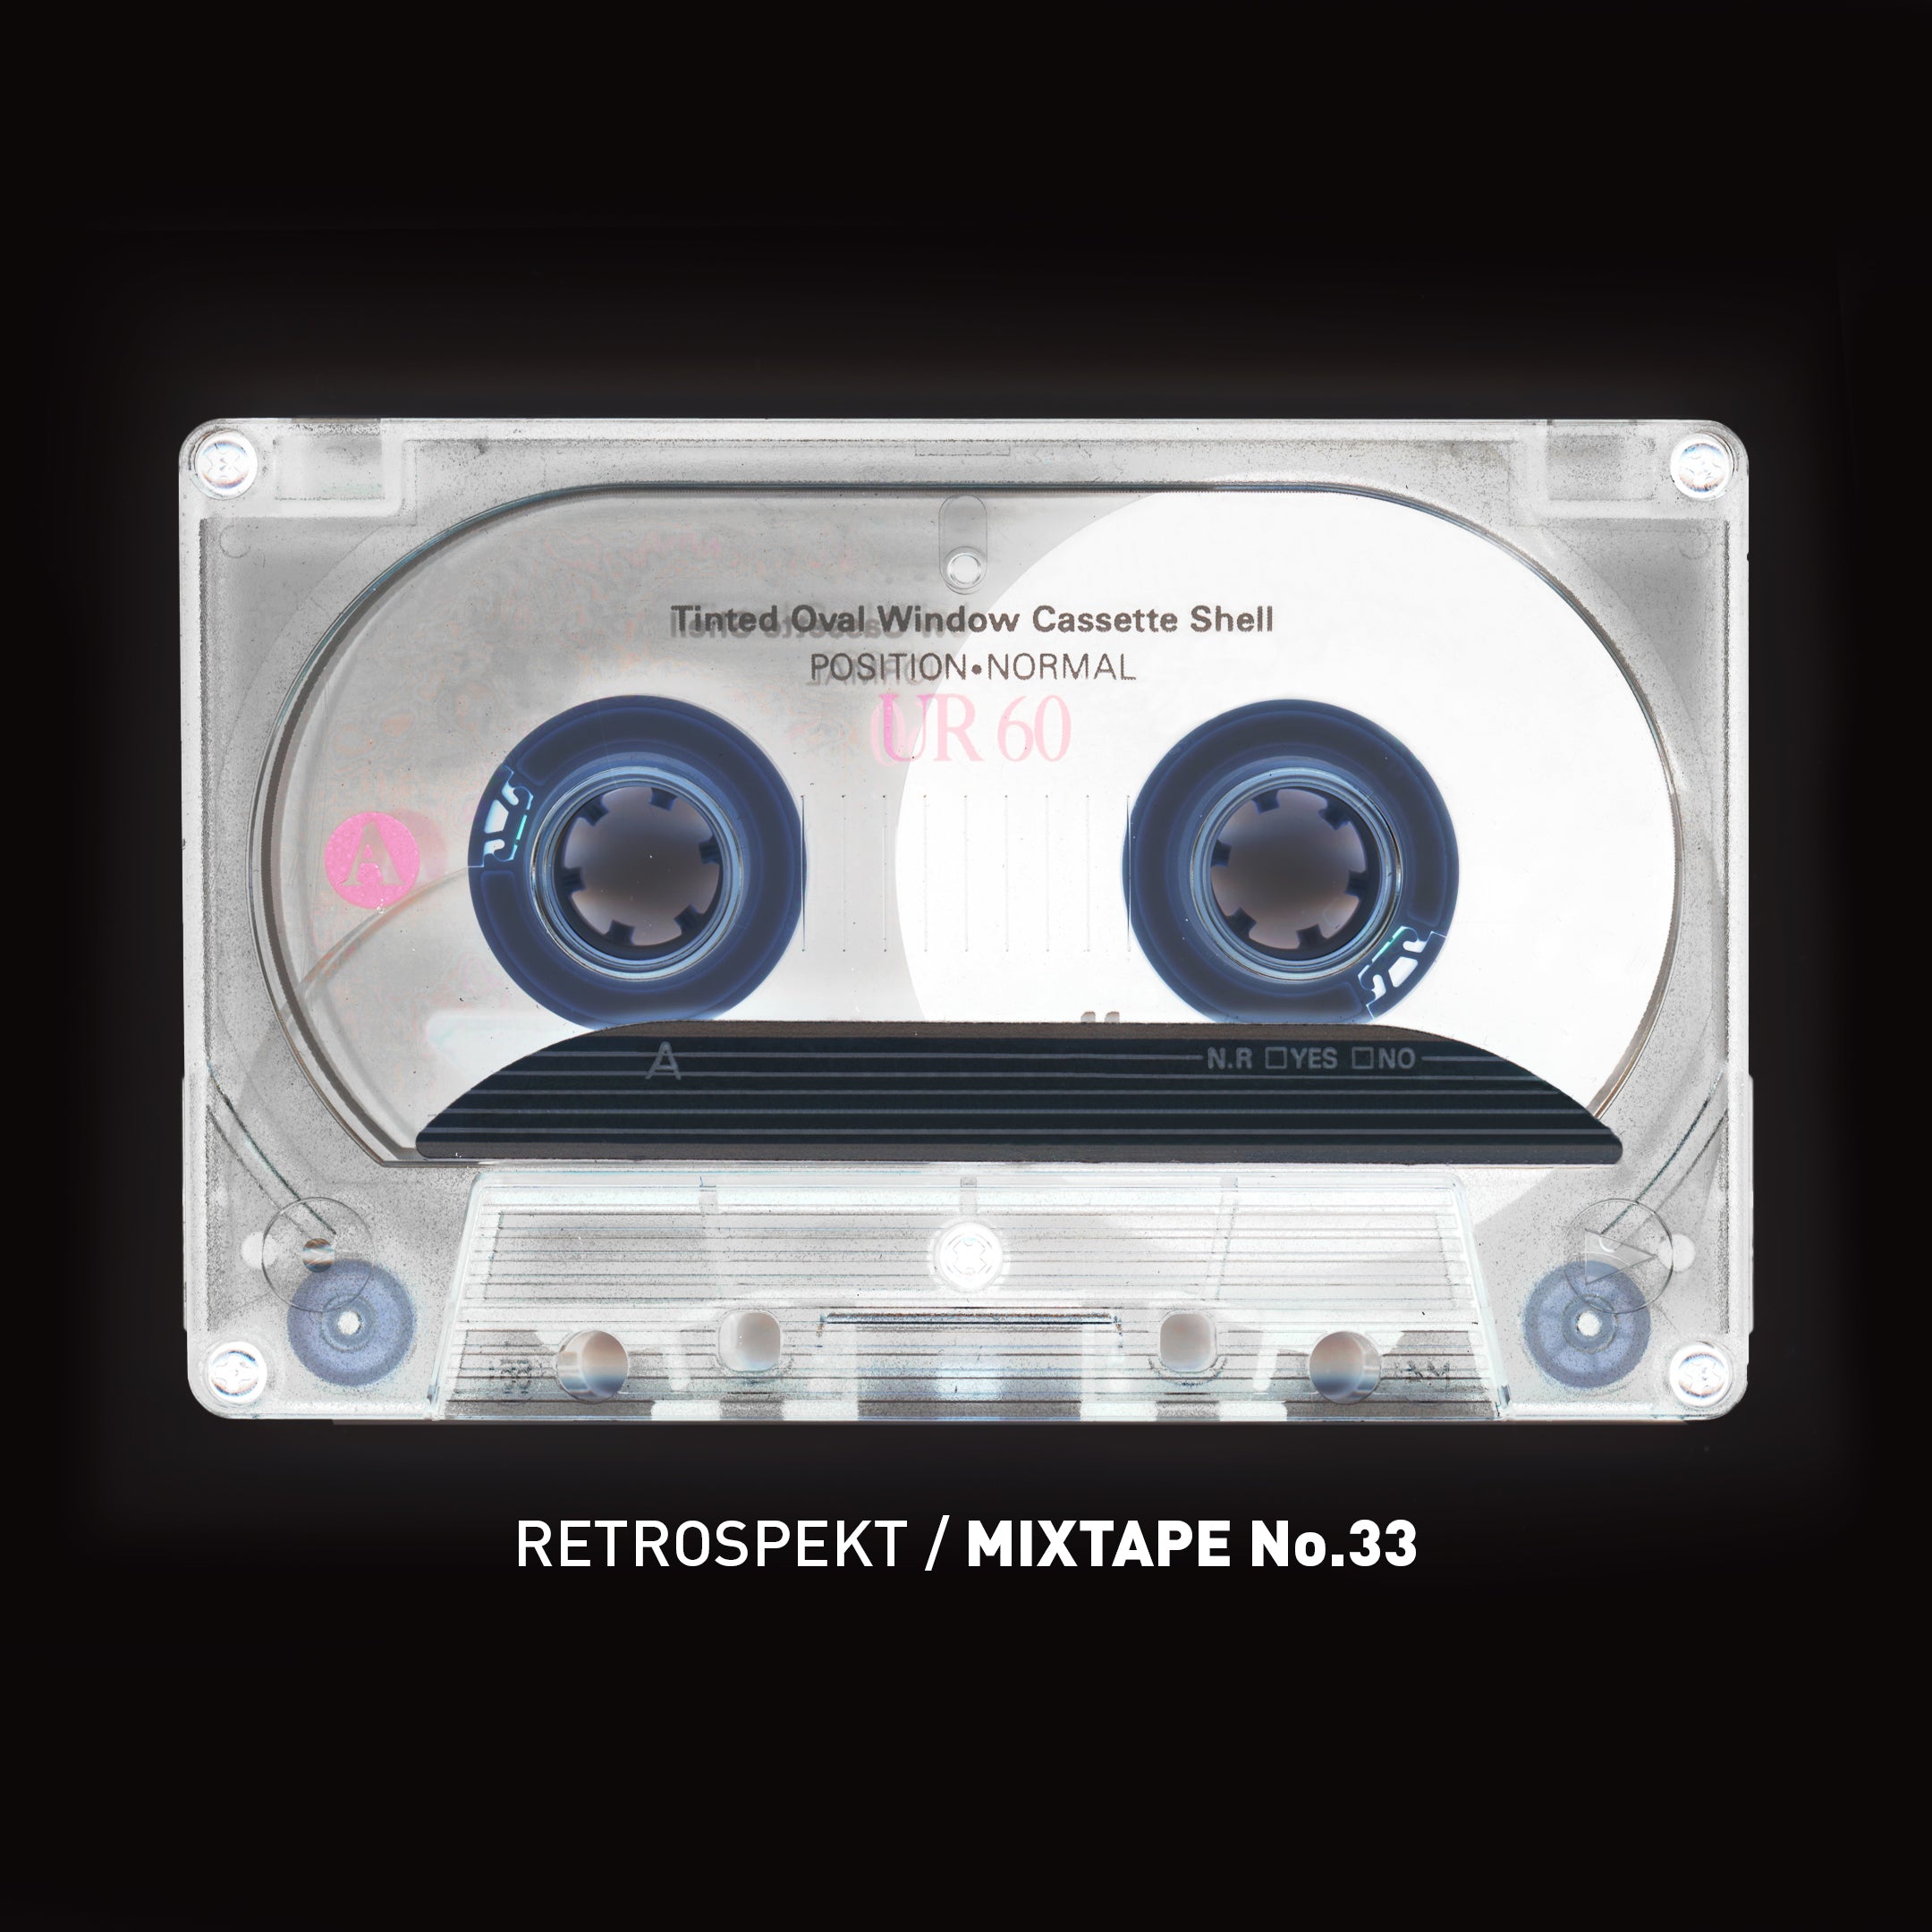 Retrospekt Mixtape No. 33